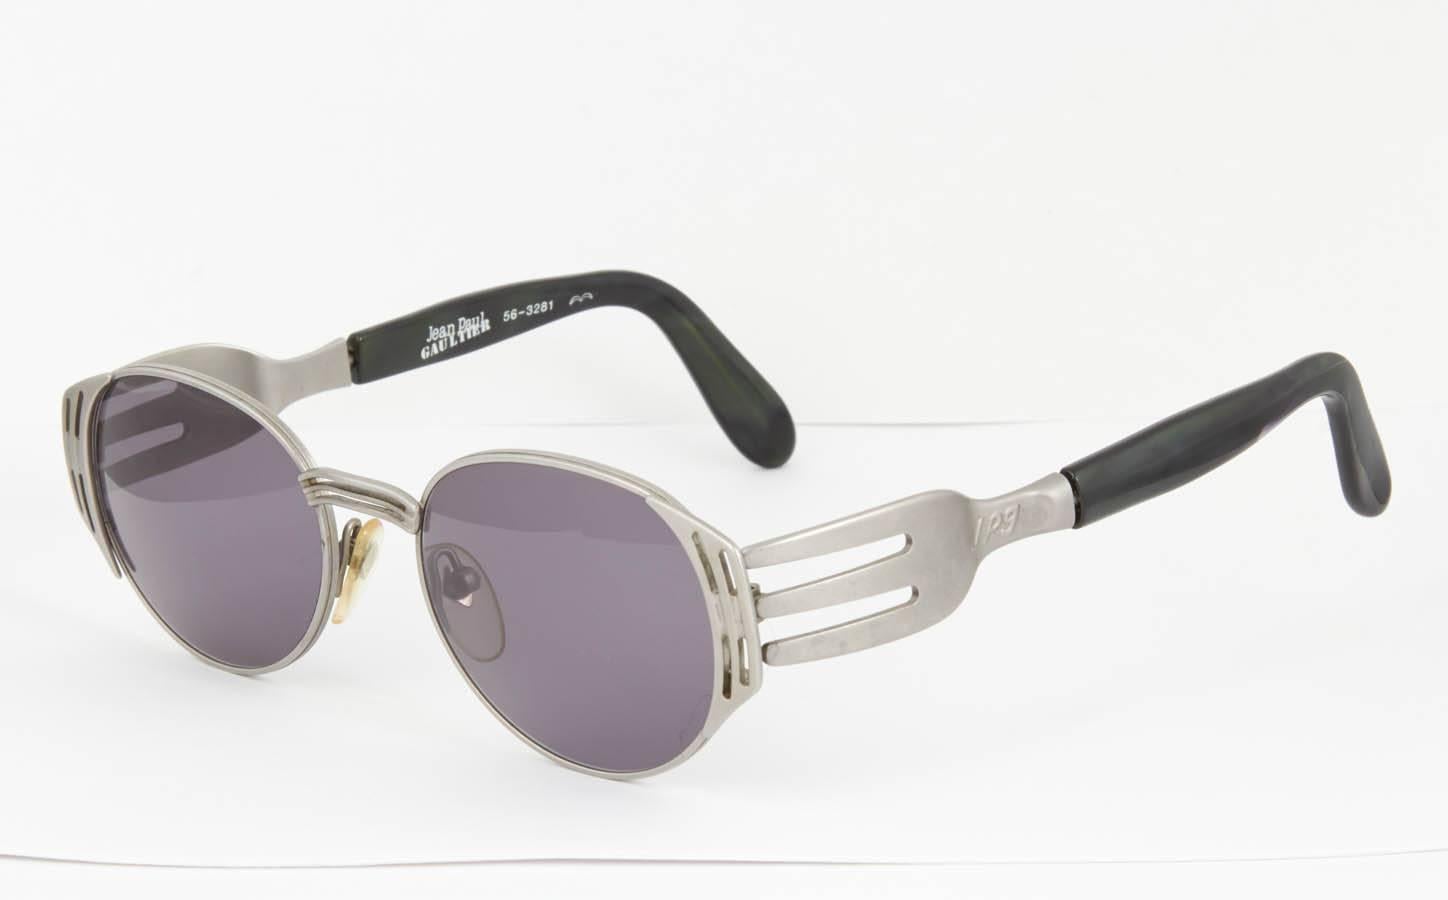 jean paul gaultier fork sunglasses